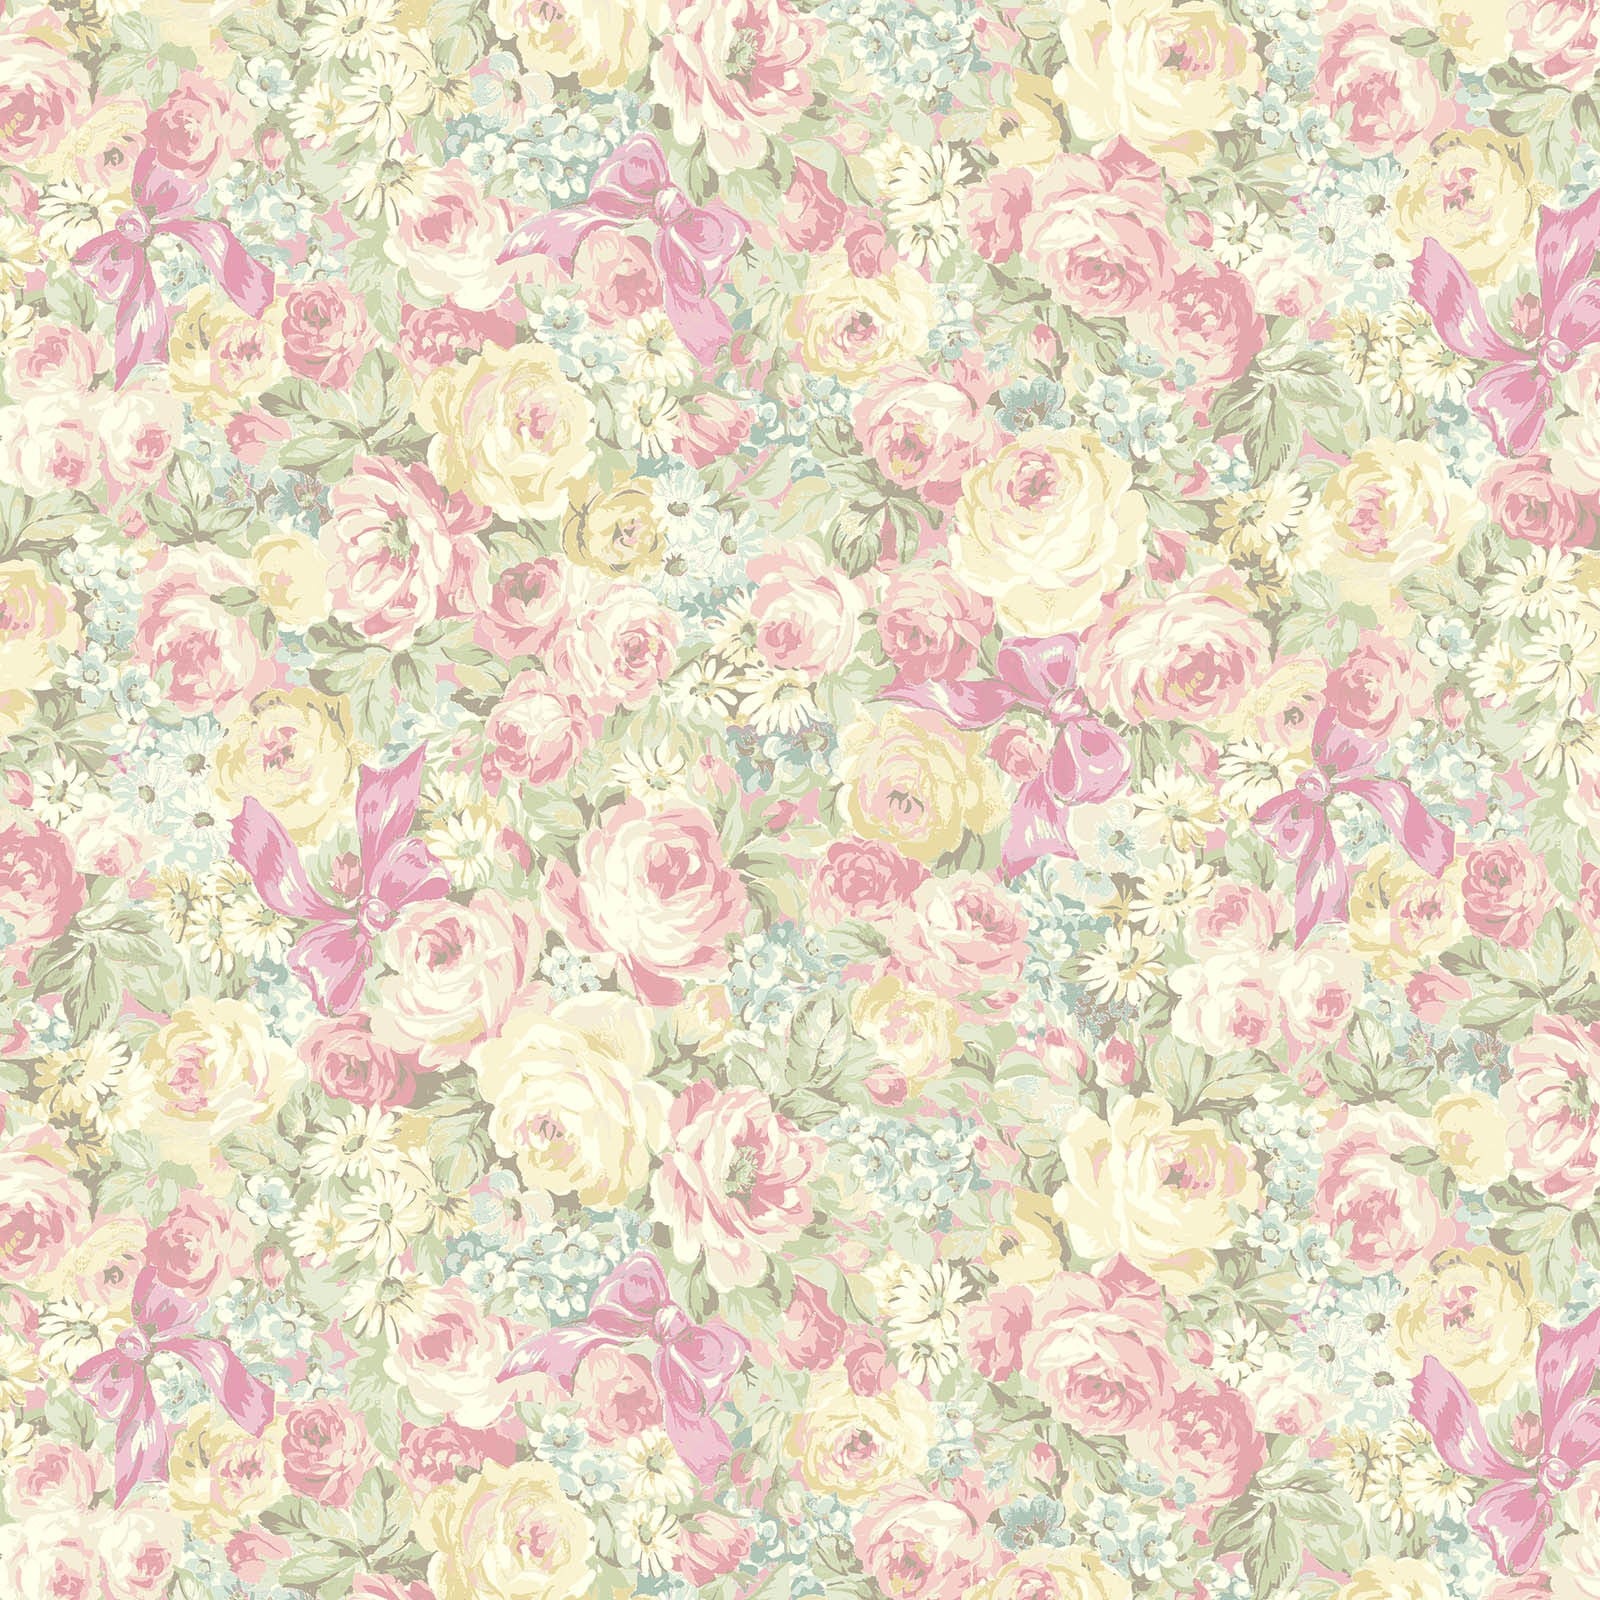 Rose Waltz RuRu Bouquet cotton fabric by Quilt Gate Ru2450-13A Packed ...